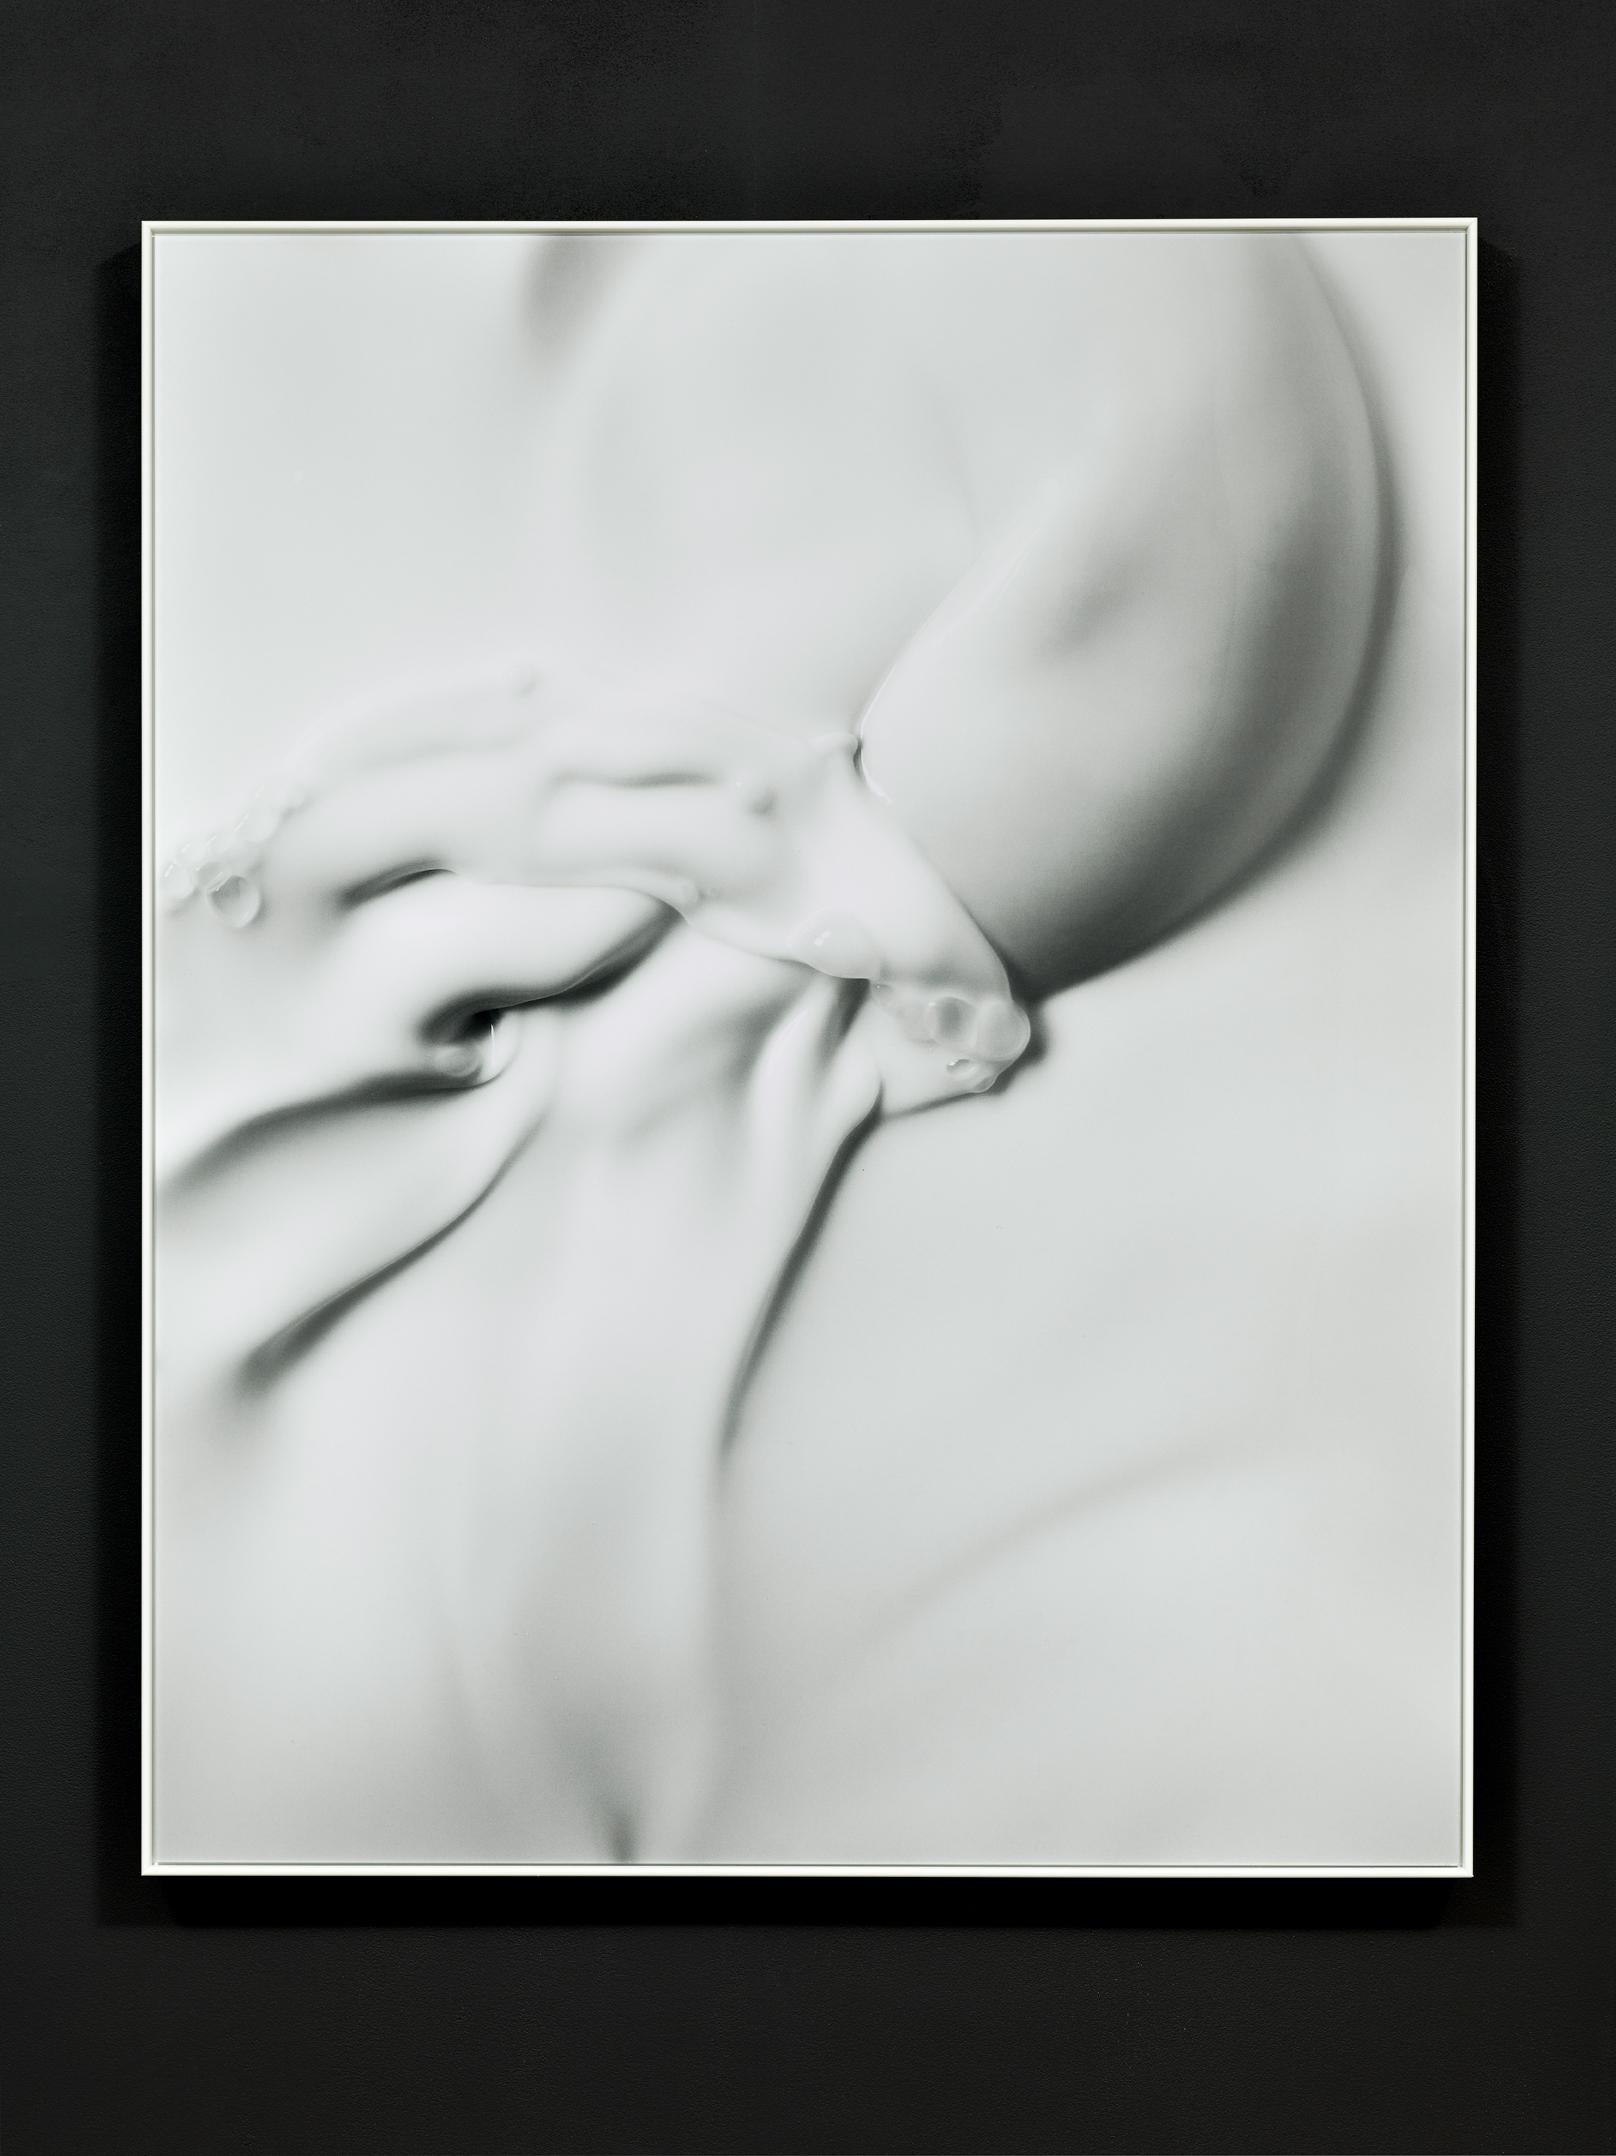 Ben Tricklebank Black and White Photograph - 'Endec-2' -photography, nude, fluid, monochrome, minimal. 